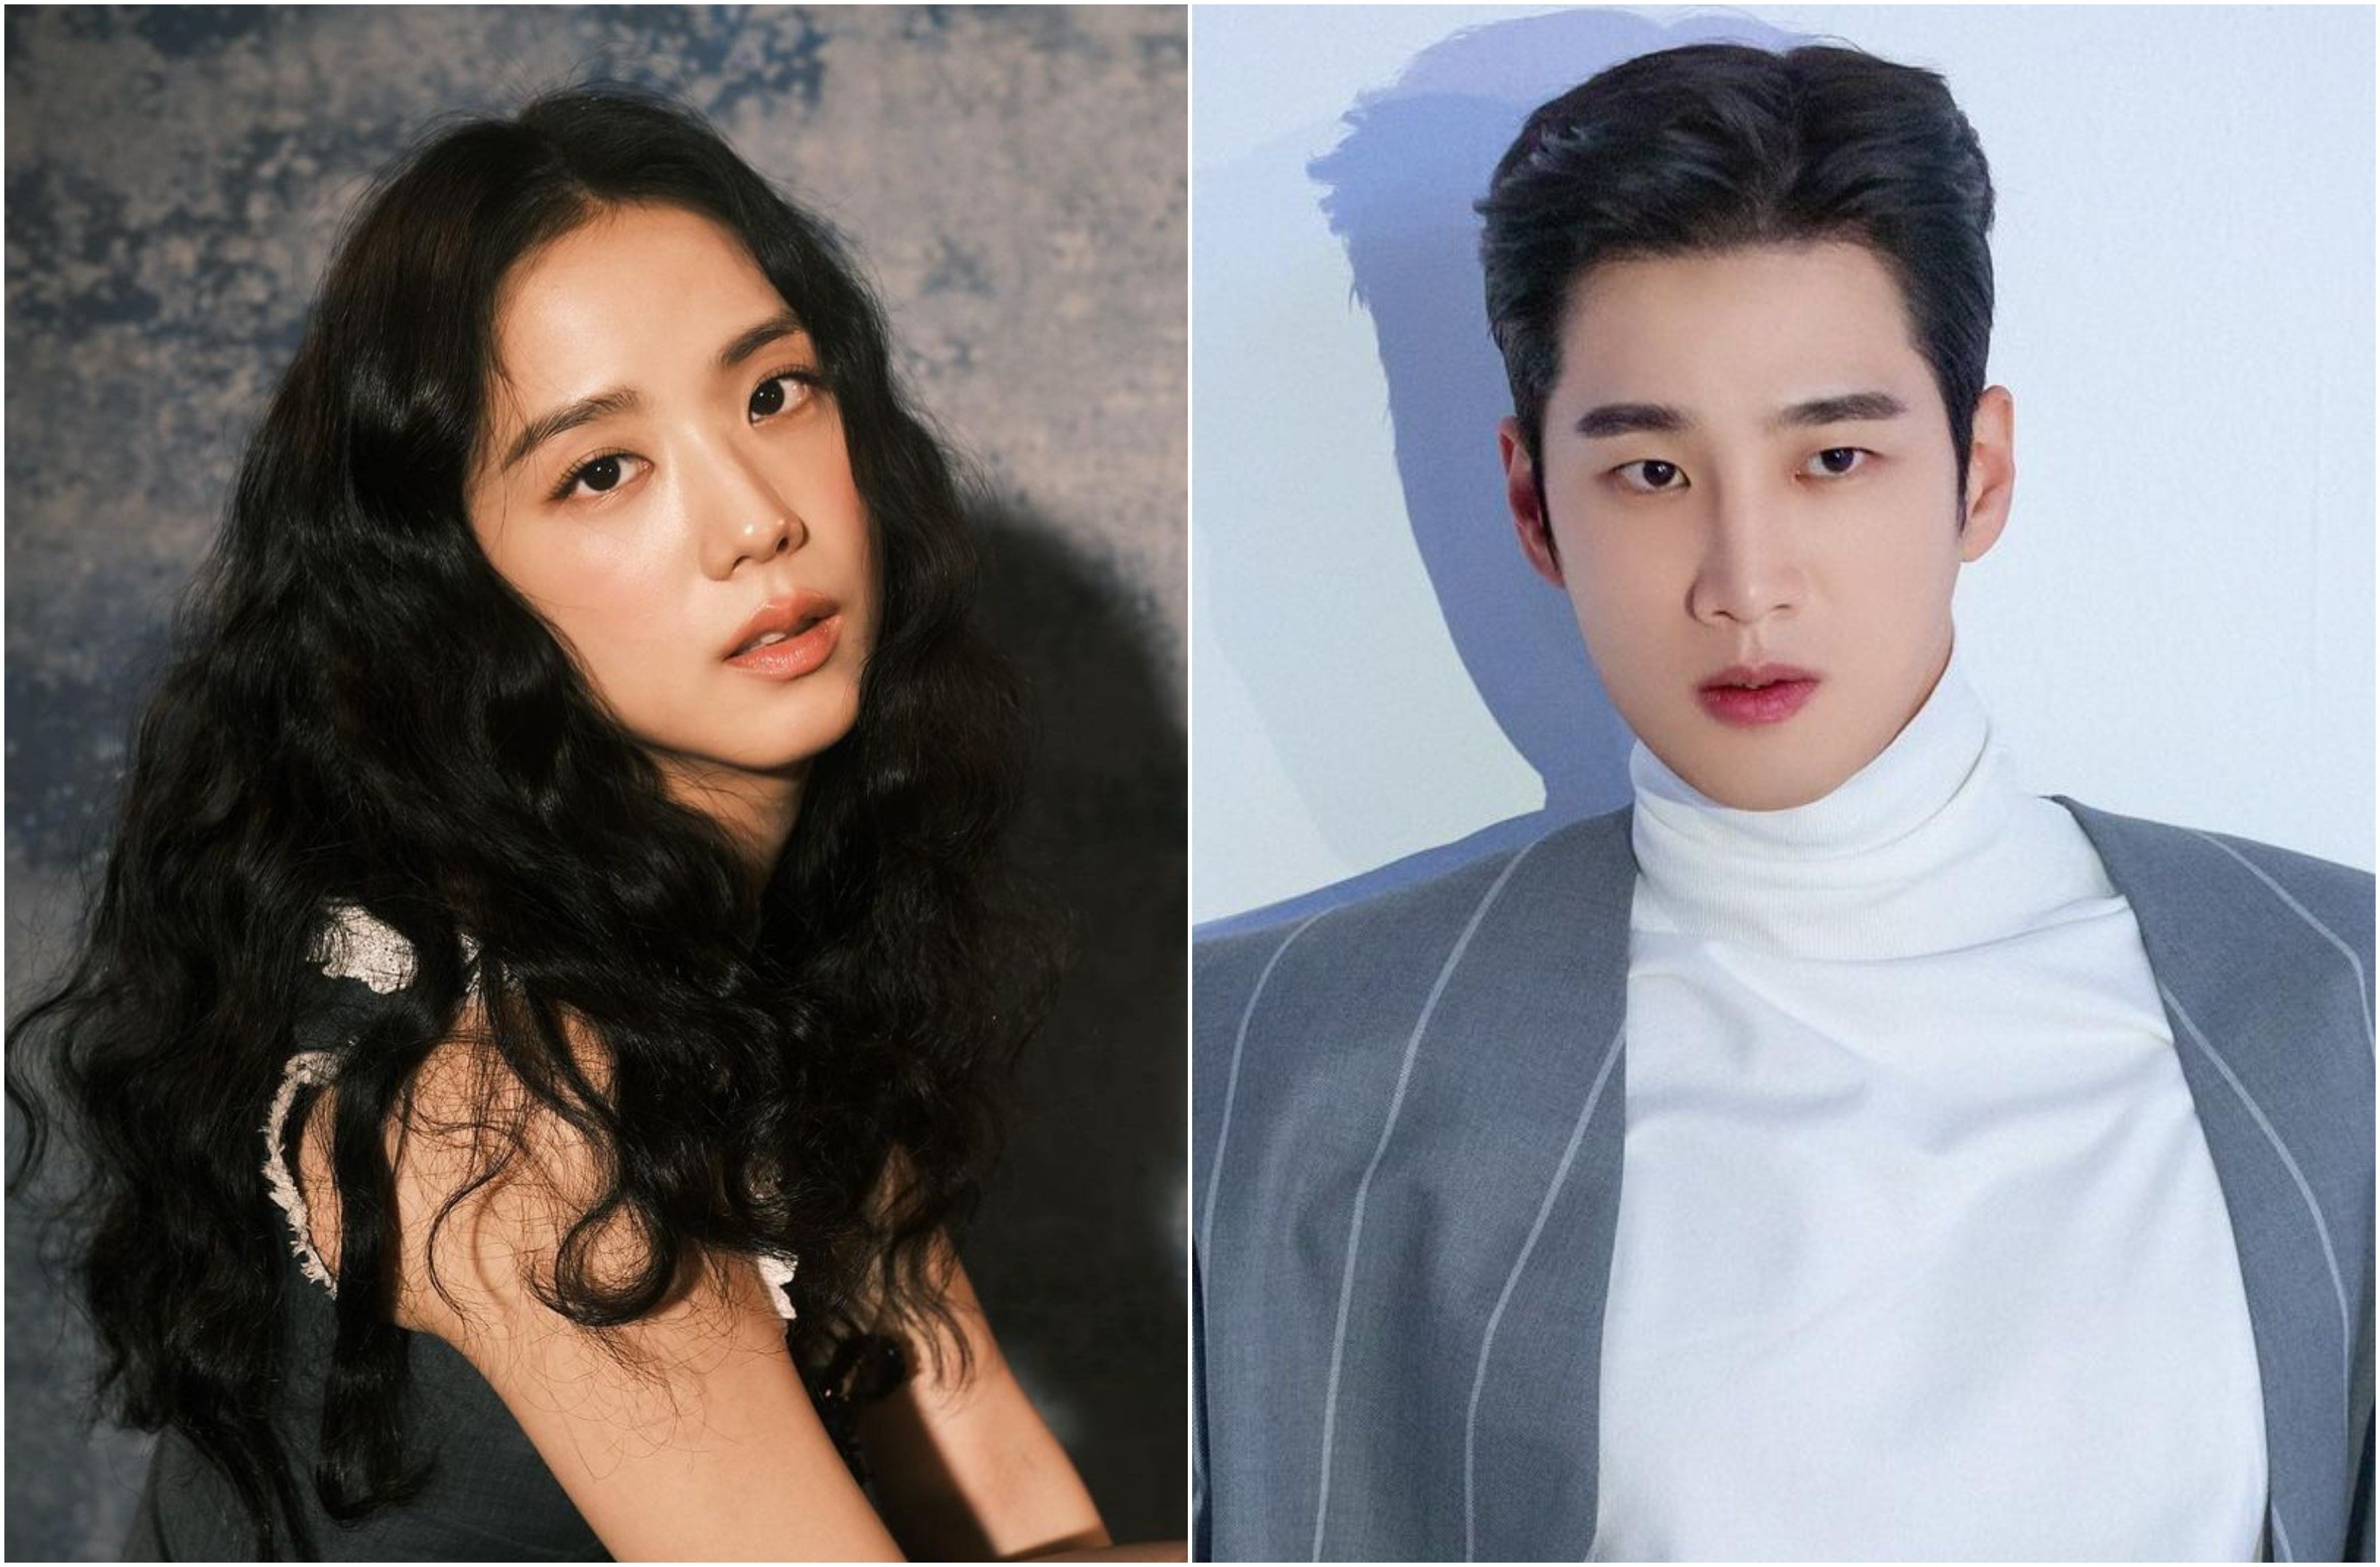 K-pop star Jisoo of Blackpink and Korean actor Ahn Bo-hyun are no longer dating. Photo: Instagram/@sooyaaa__ / @bohyunahn/Instagram